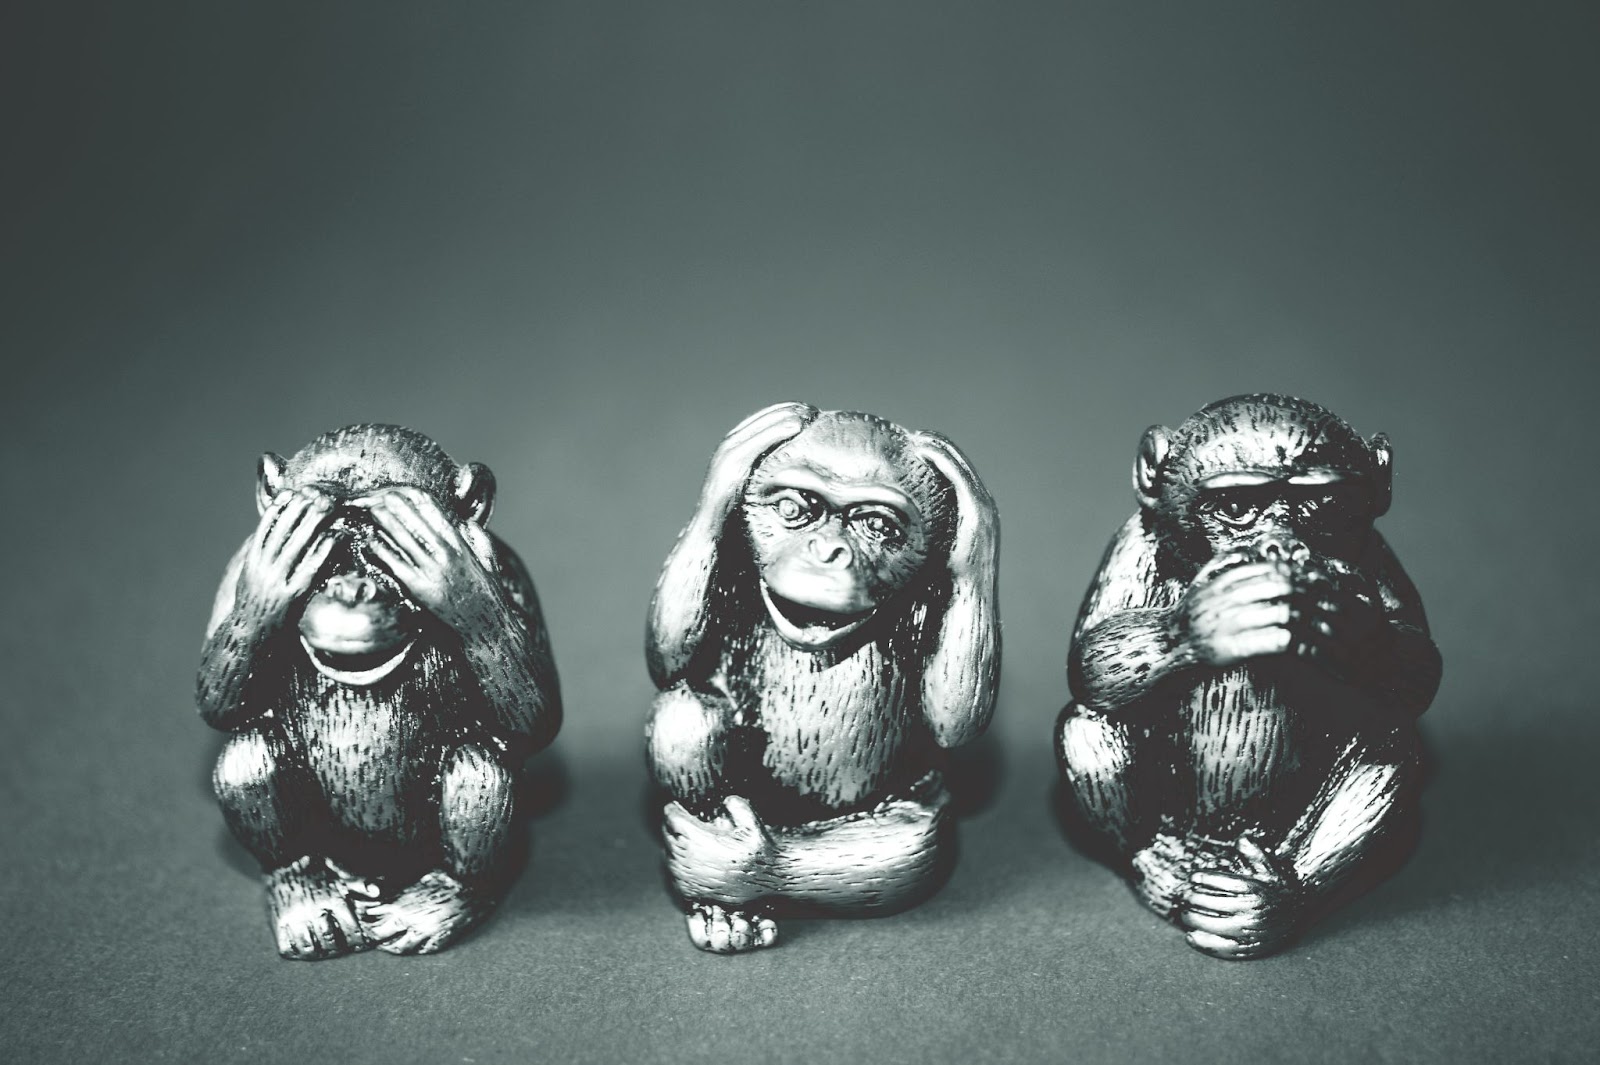 Image of the "see no evil, hear no evil, speak no evil" monkeys